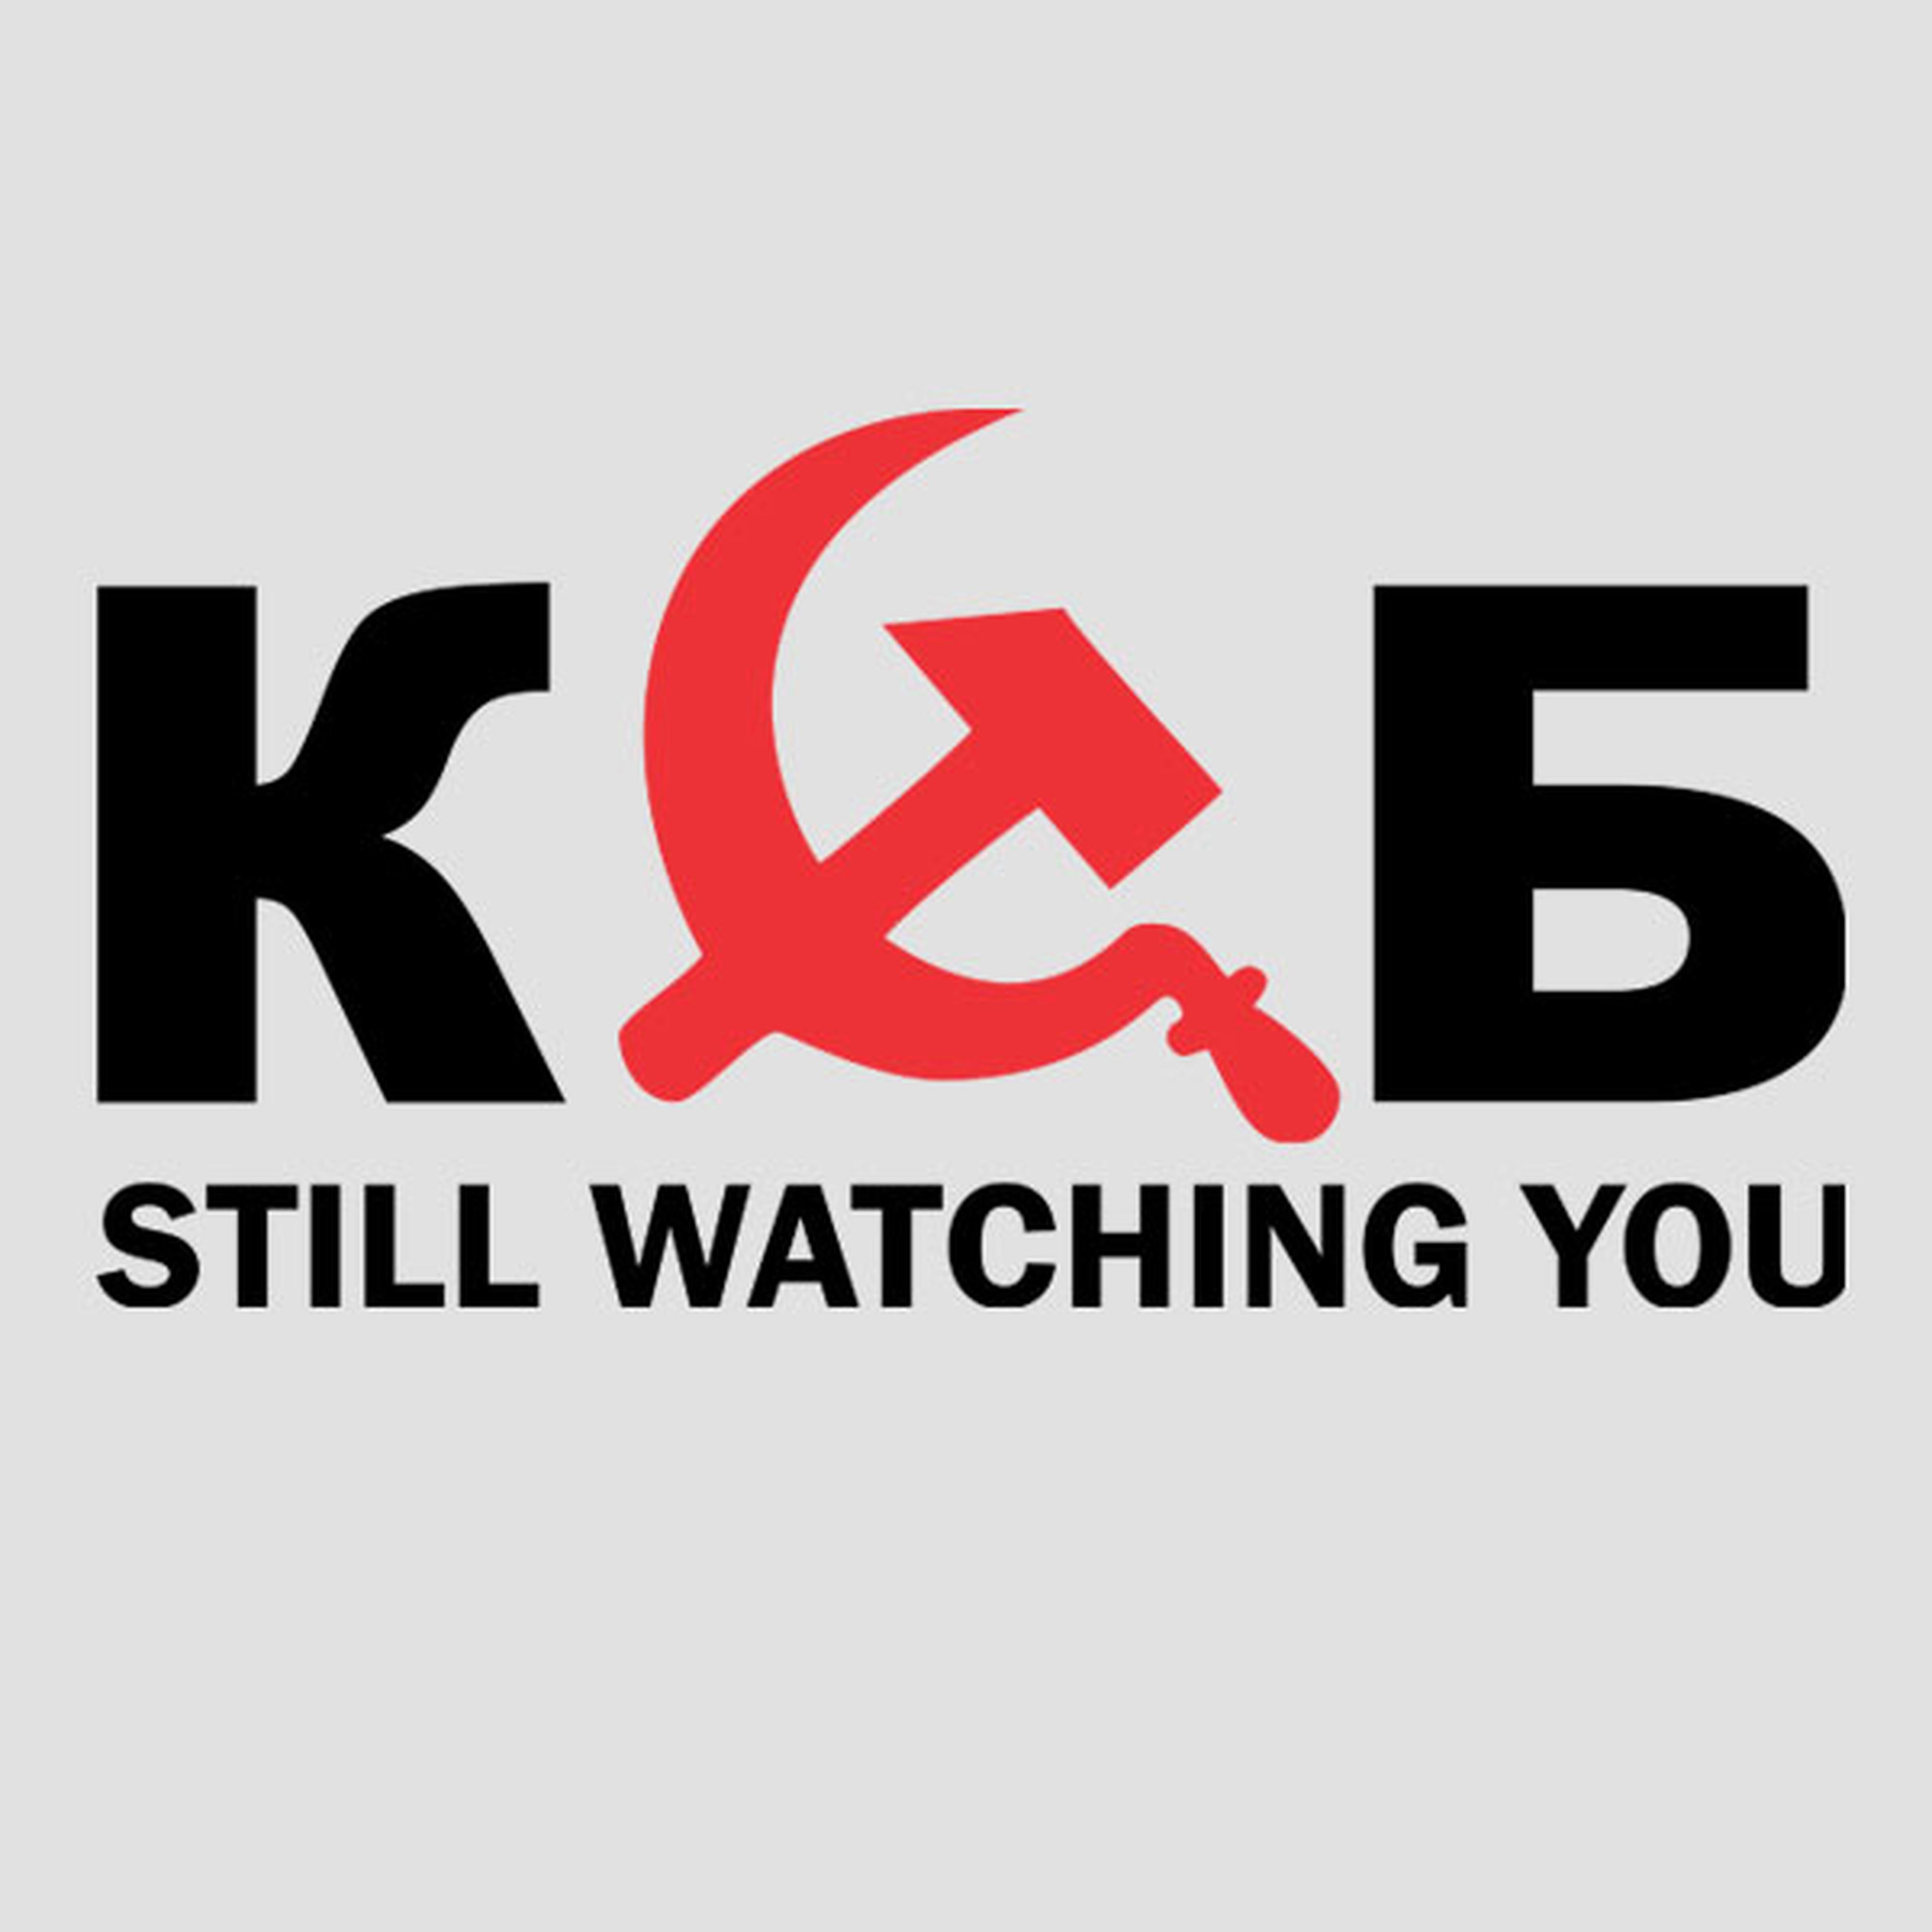 KGB still watching you - T-shirt